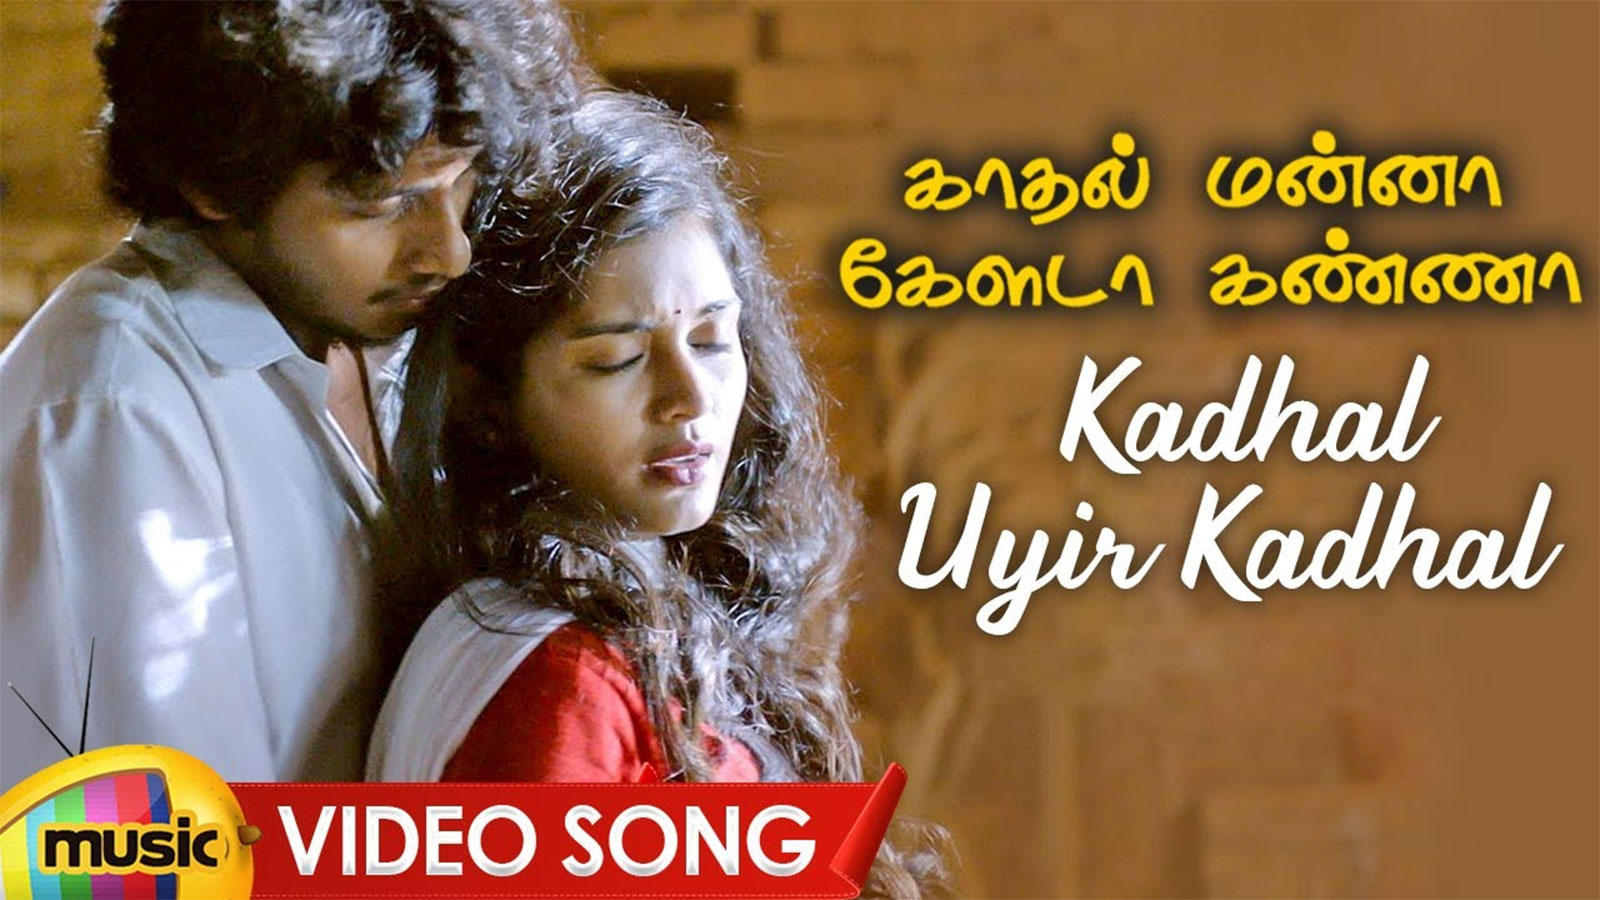 Kadhal Manna Khelada Khanna | Song - Kadhal Uyir Kadhal | Tamil ...